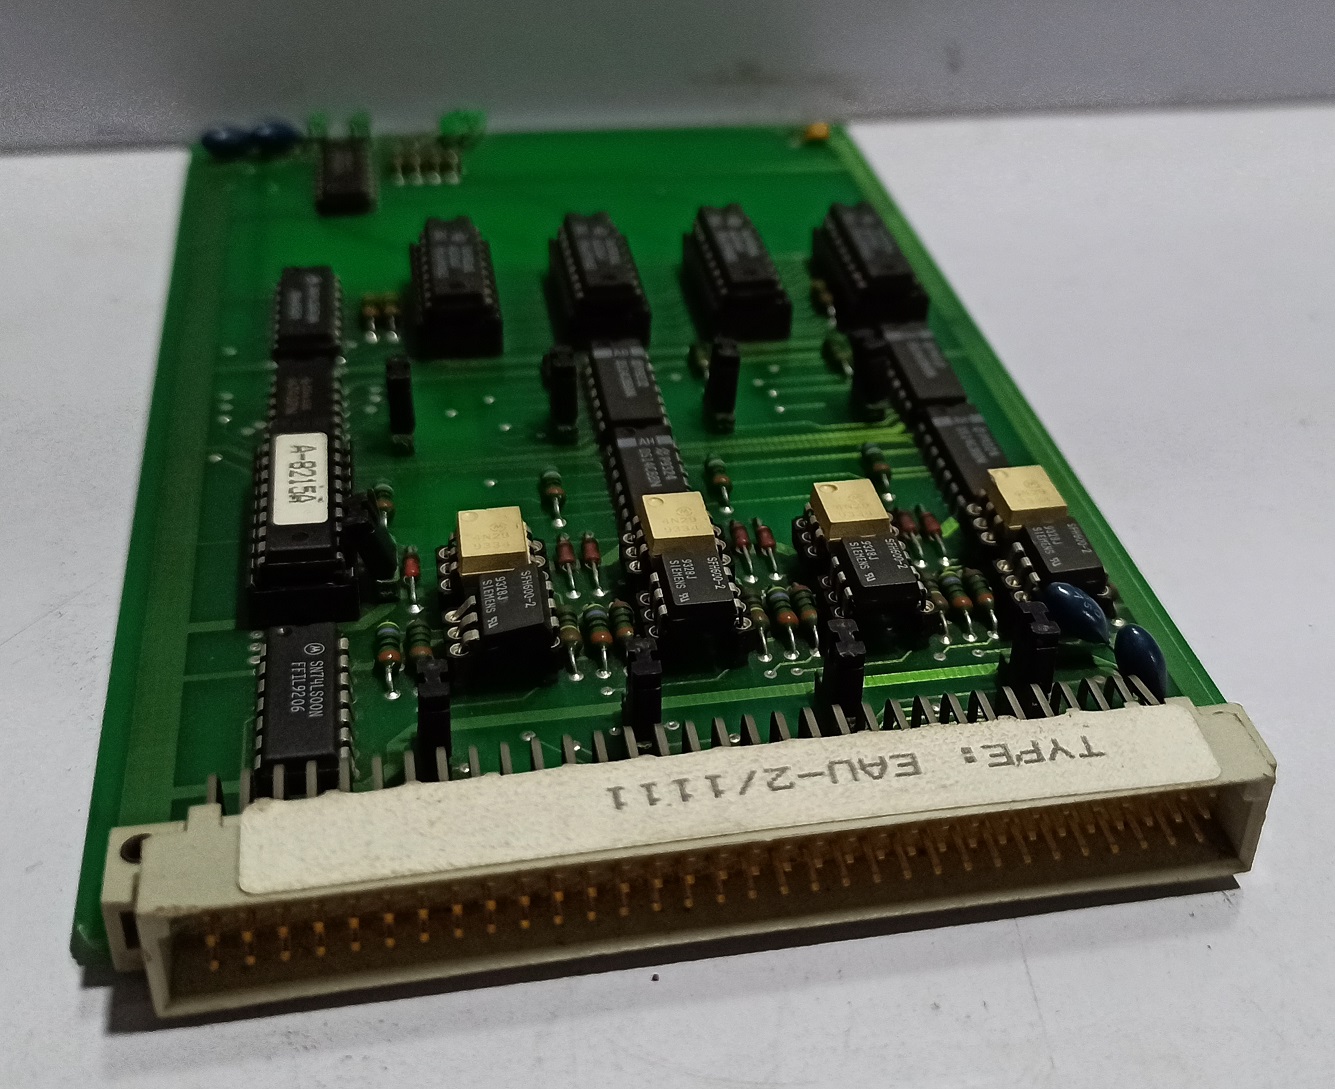 PCB EAU-2/1111 - EAU-1 / 1111 - 7252-046.0002 Side A - Print Circuit Board